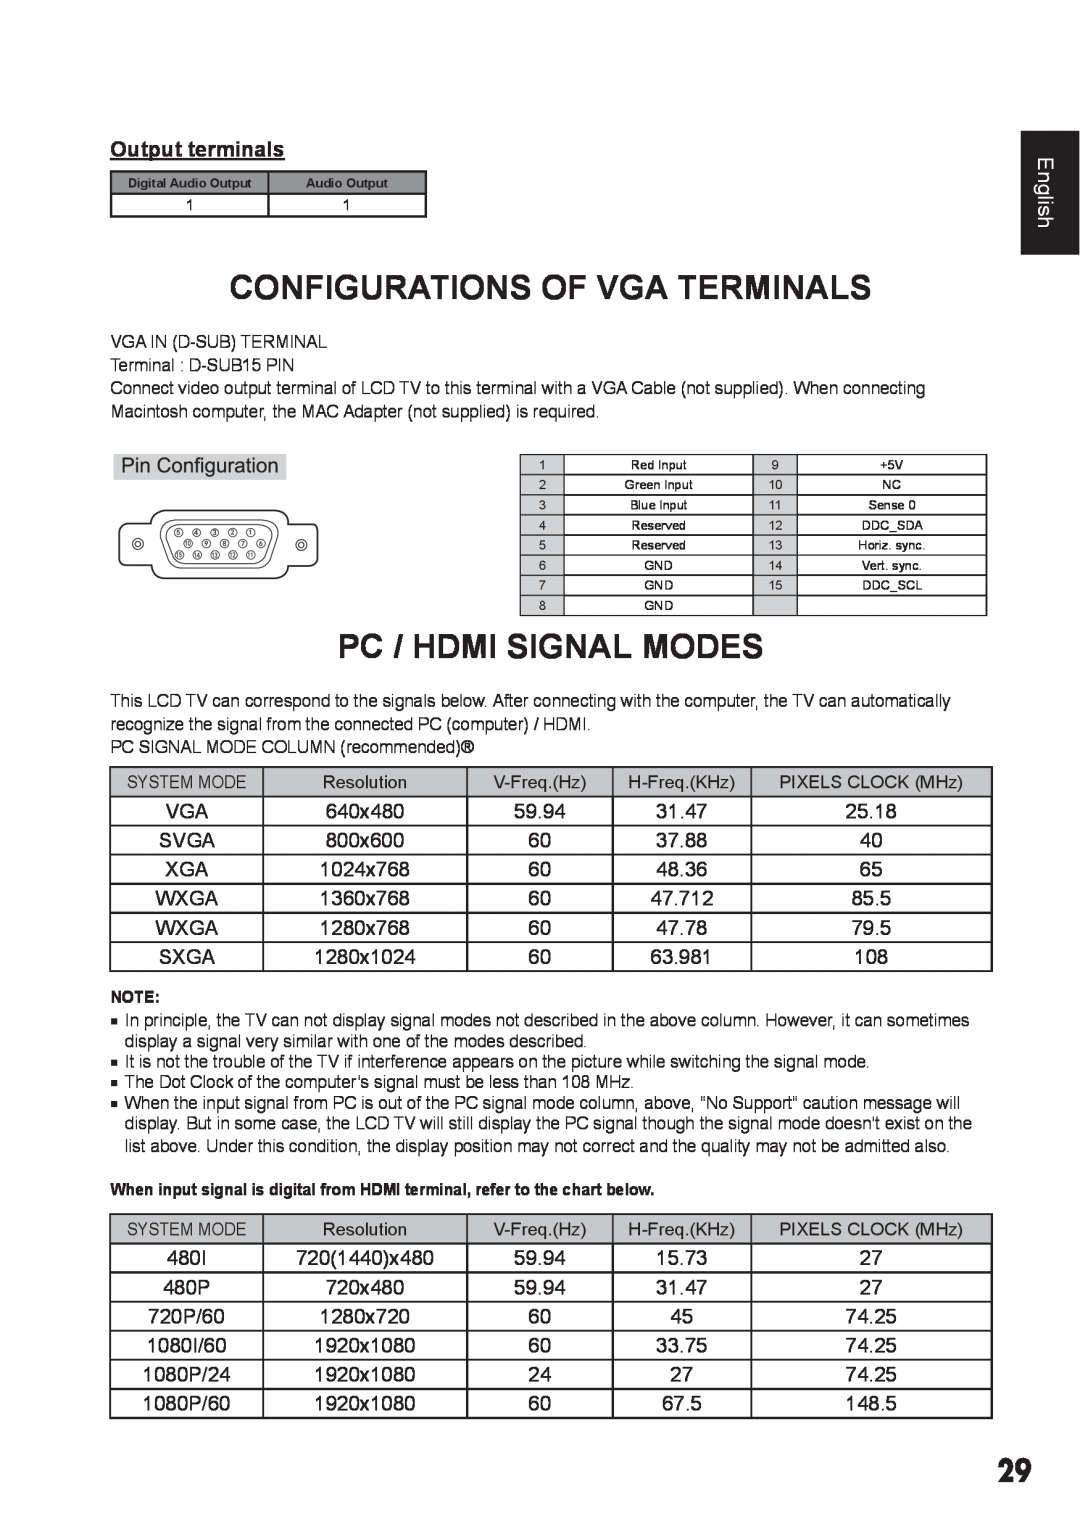 Sanyo DP42410 manual Configurations Of Vga Terminals, Pc / Hdmi Signal Modes, Output terminals, English 